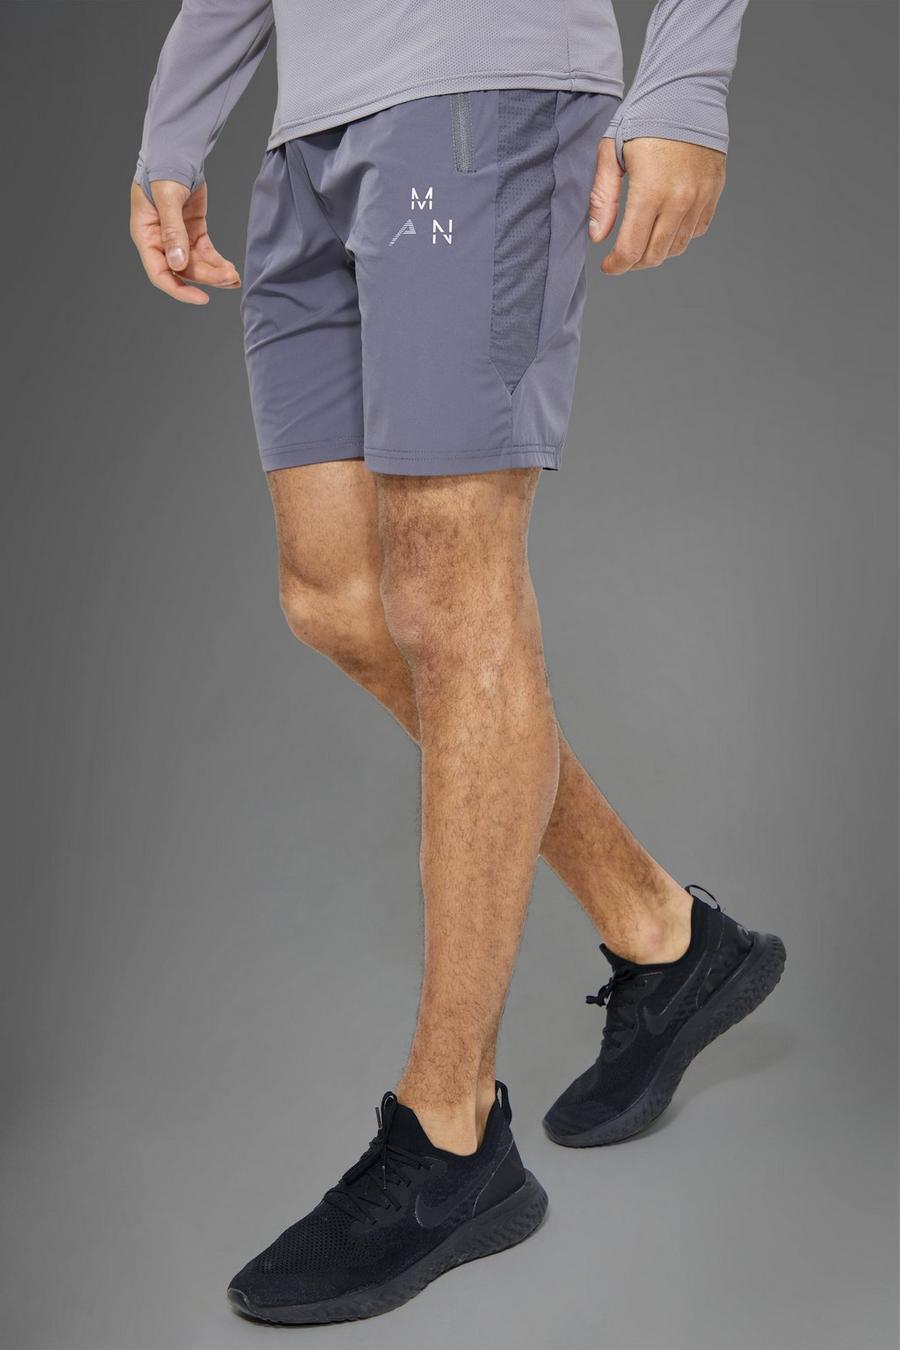 Pantaloncini Man Active Gym con pannelli riflettenti, Charcoal gris